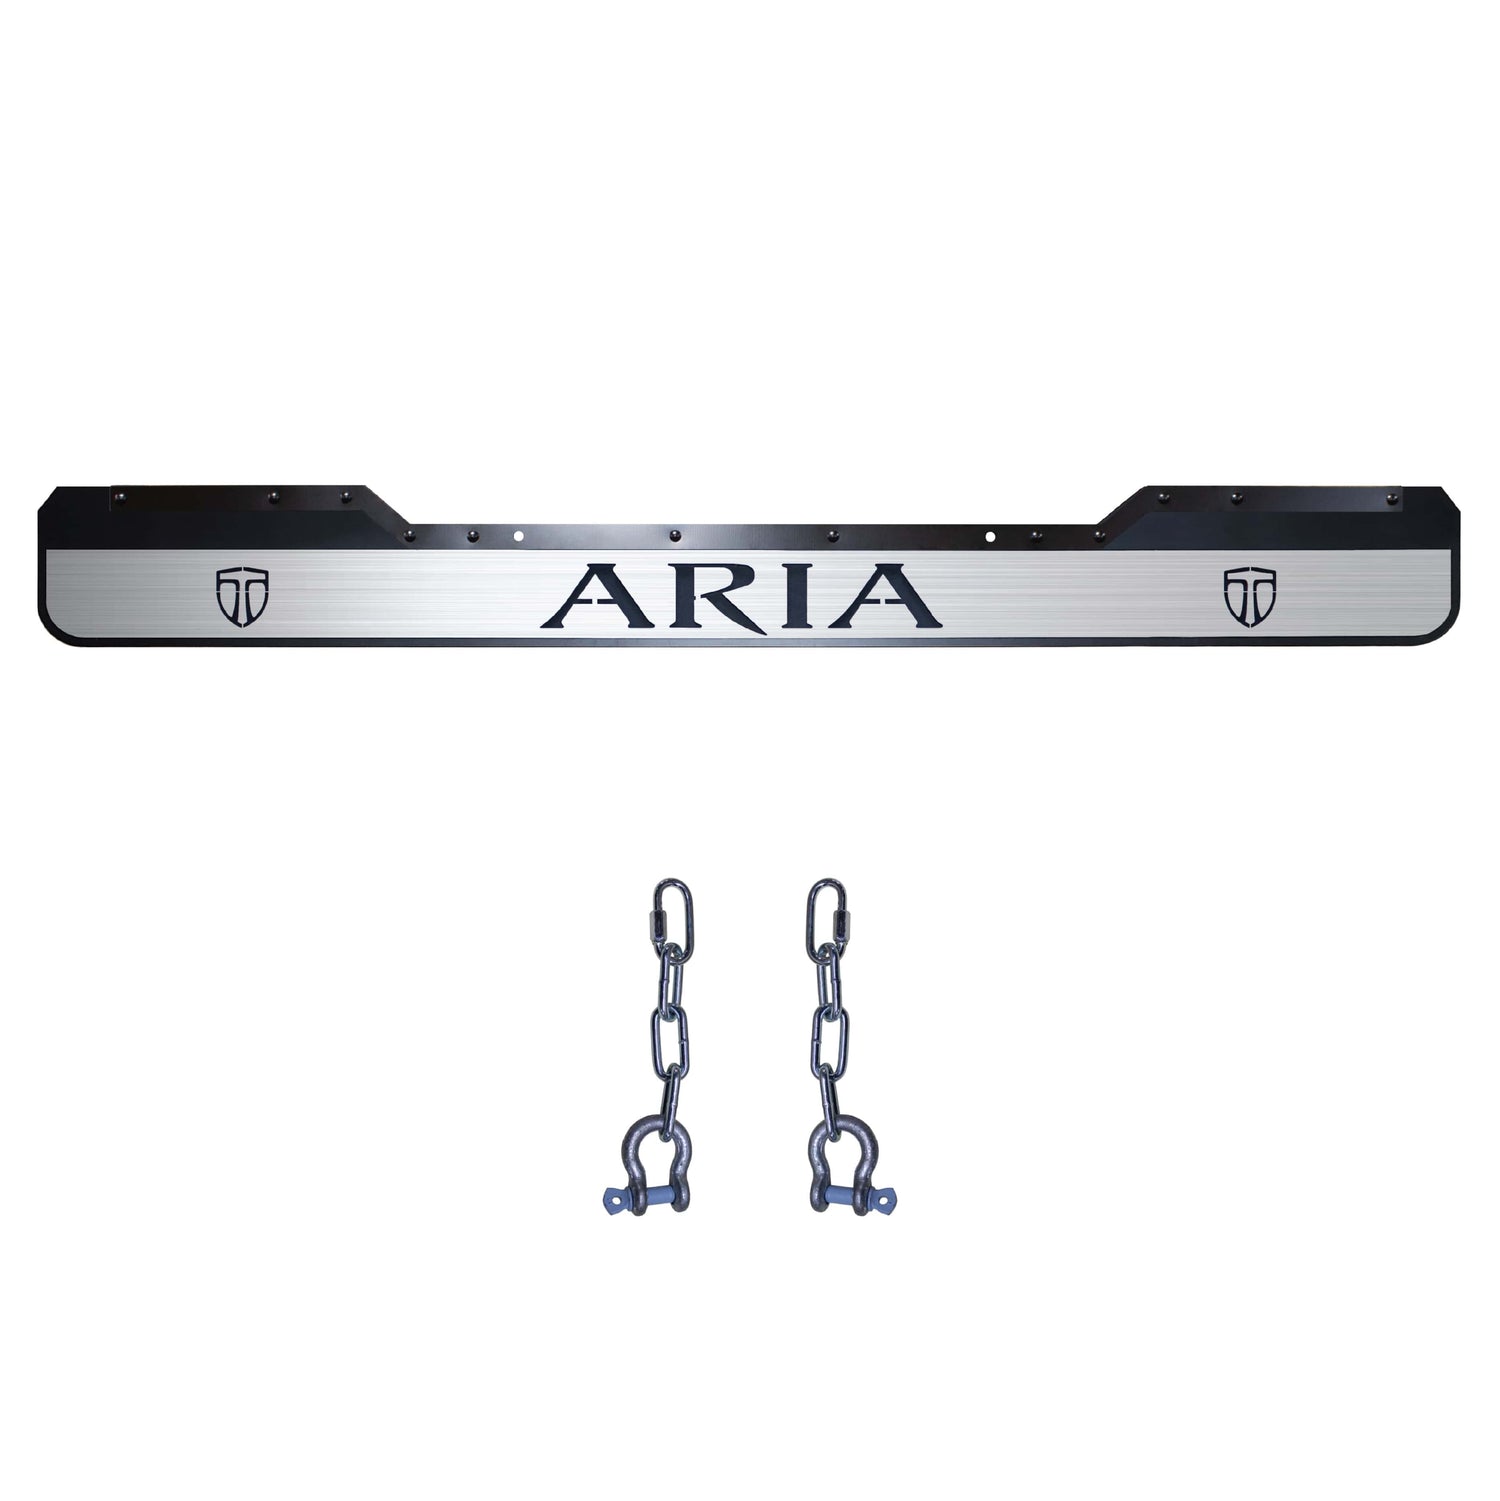 Future-Sales-Rock-Guard-ARIA-11-inch-Notched-Rock-Guard-brush-finish-MFR-ARIA-11NB-hardware